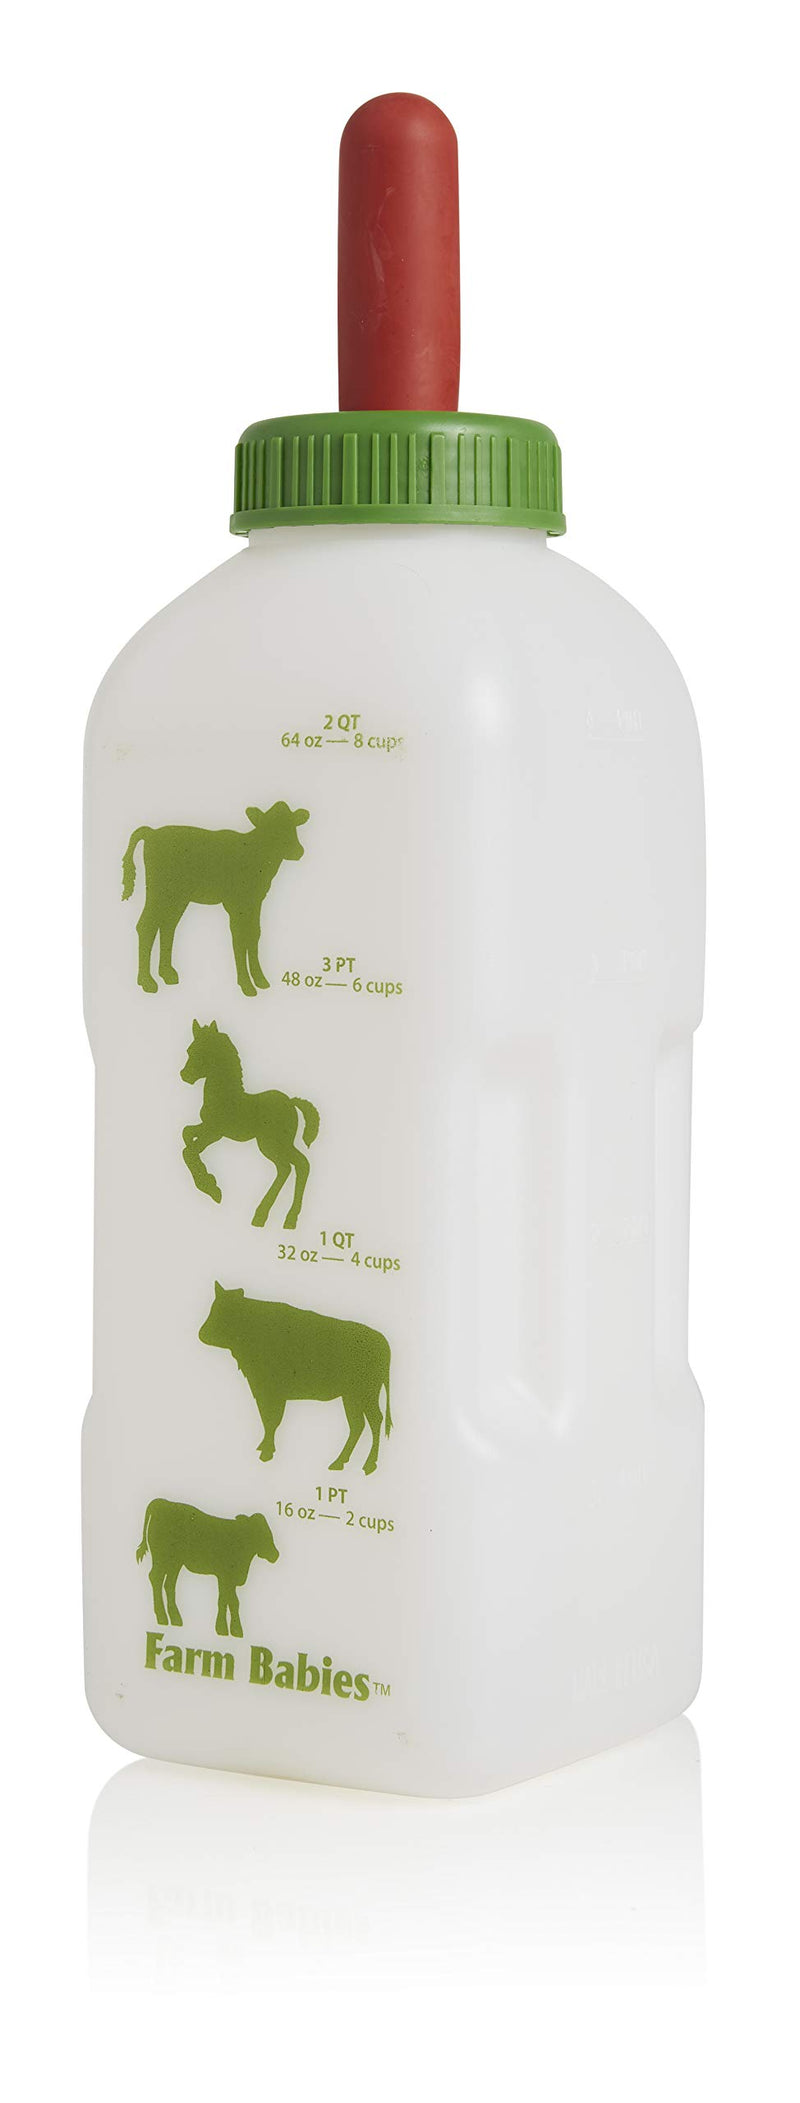 Lixit Animal Care Lixit Farm Baby Bottle 2 Quart - PawsPlanet Australia